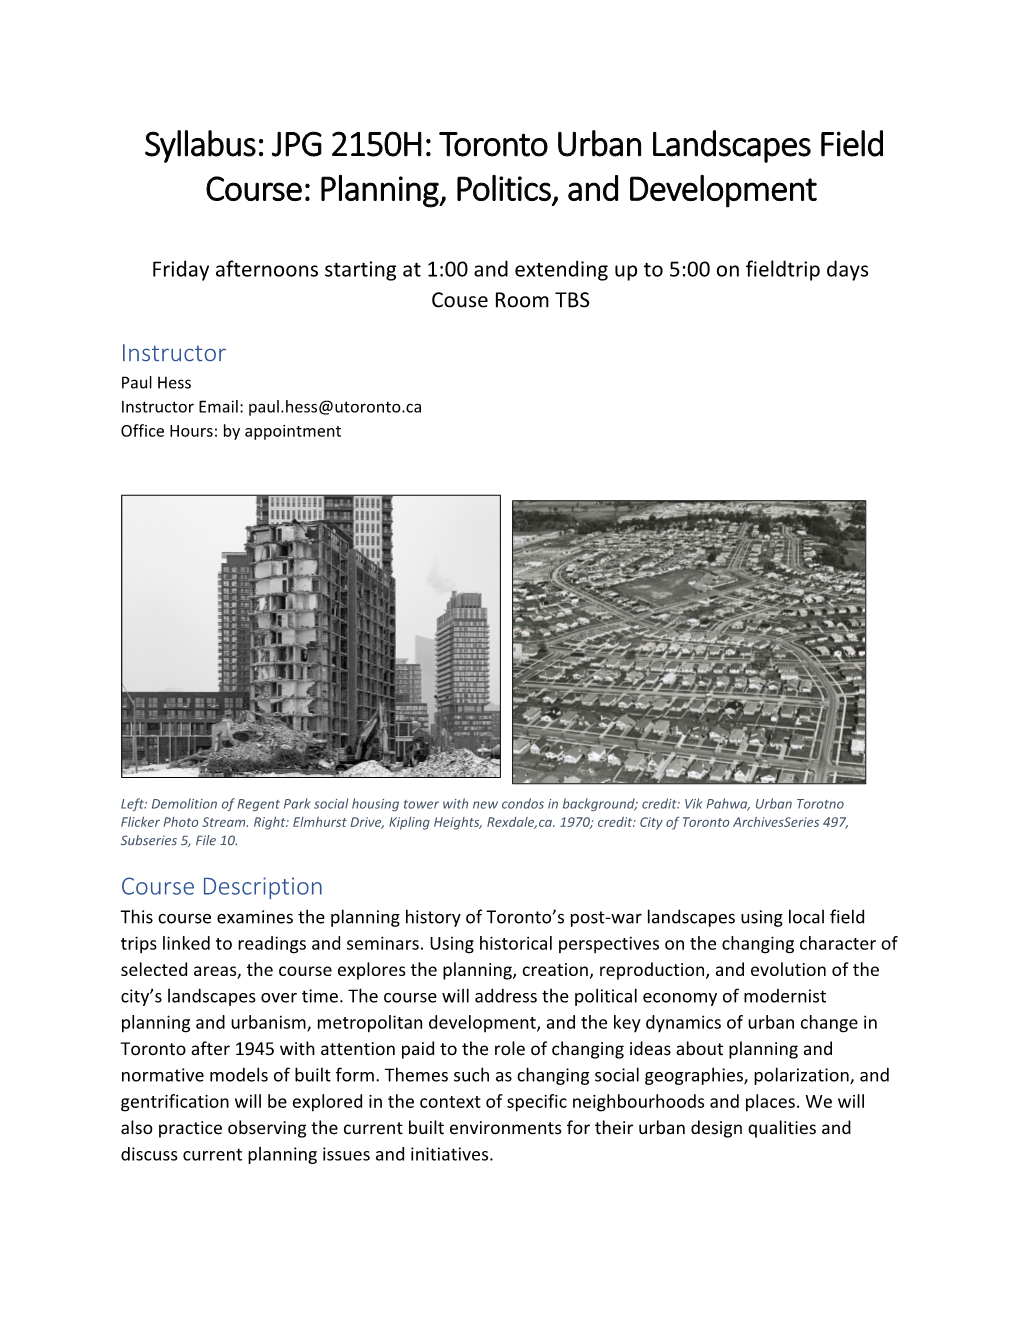 Syllabus: JPG 2150H: Toronto Urban Landscapes Field Course: Planning, Politics, and Development